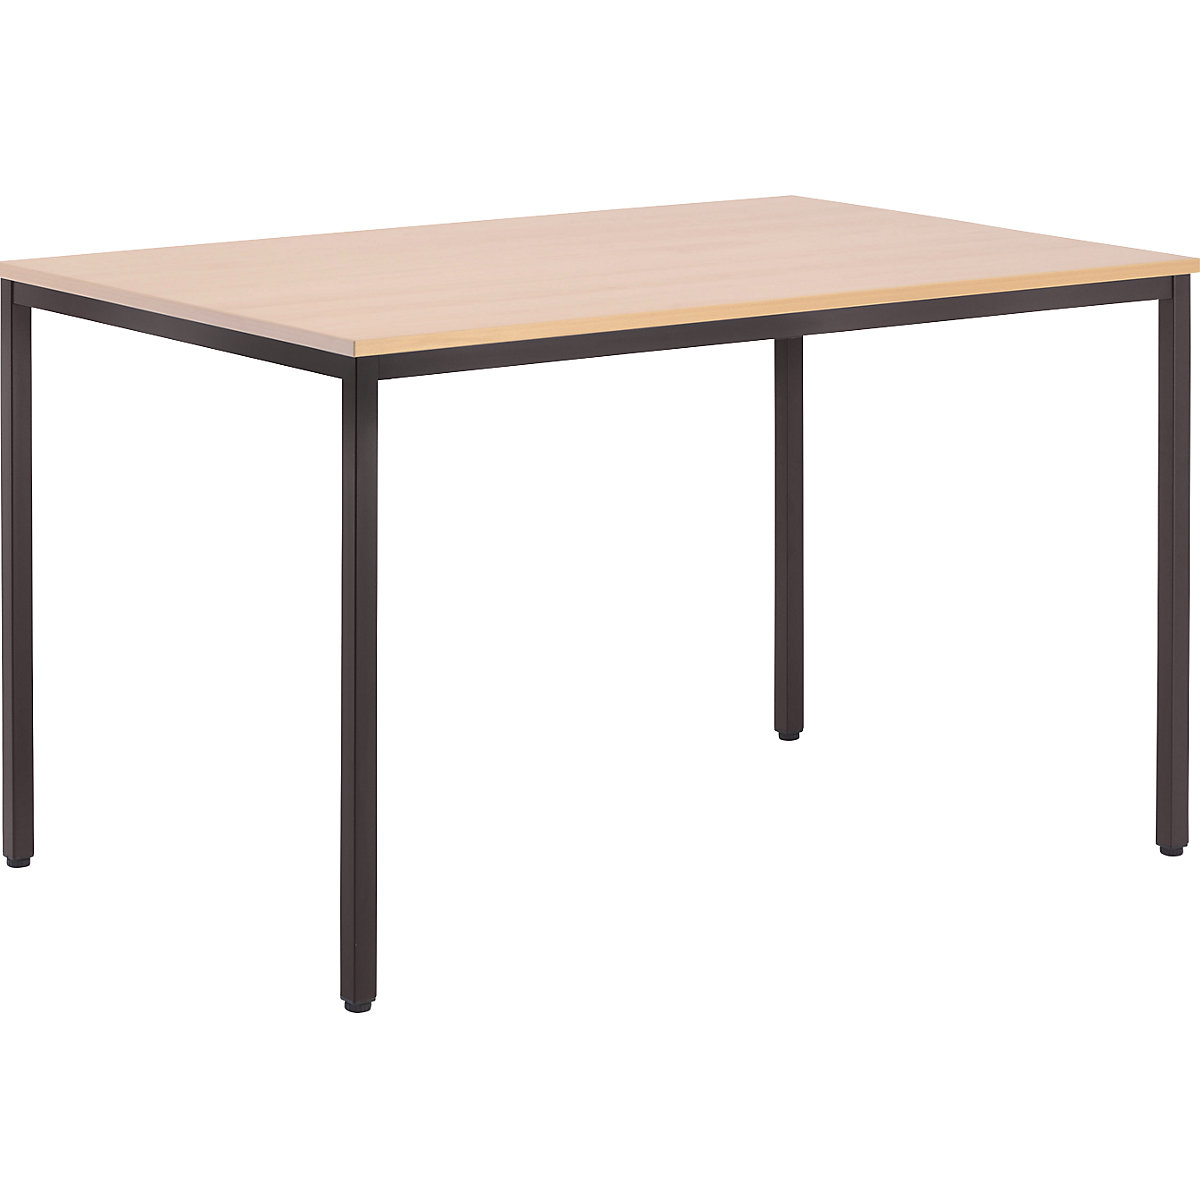 Multifunctionele tafel – eurokraft basic, h x b x d = 720 x 1200 x 800 mm, blad beukenhoutdecor, frame grijsbruin